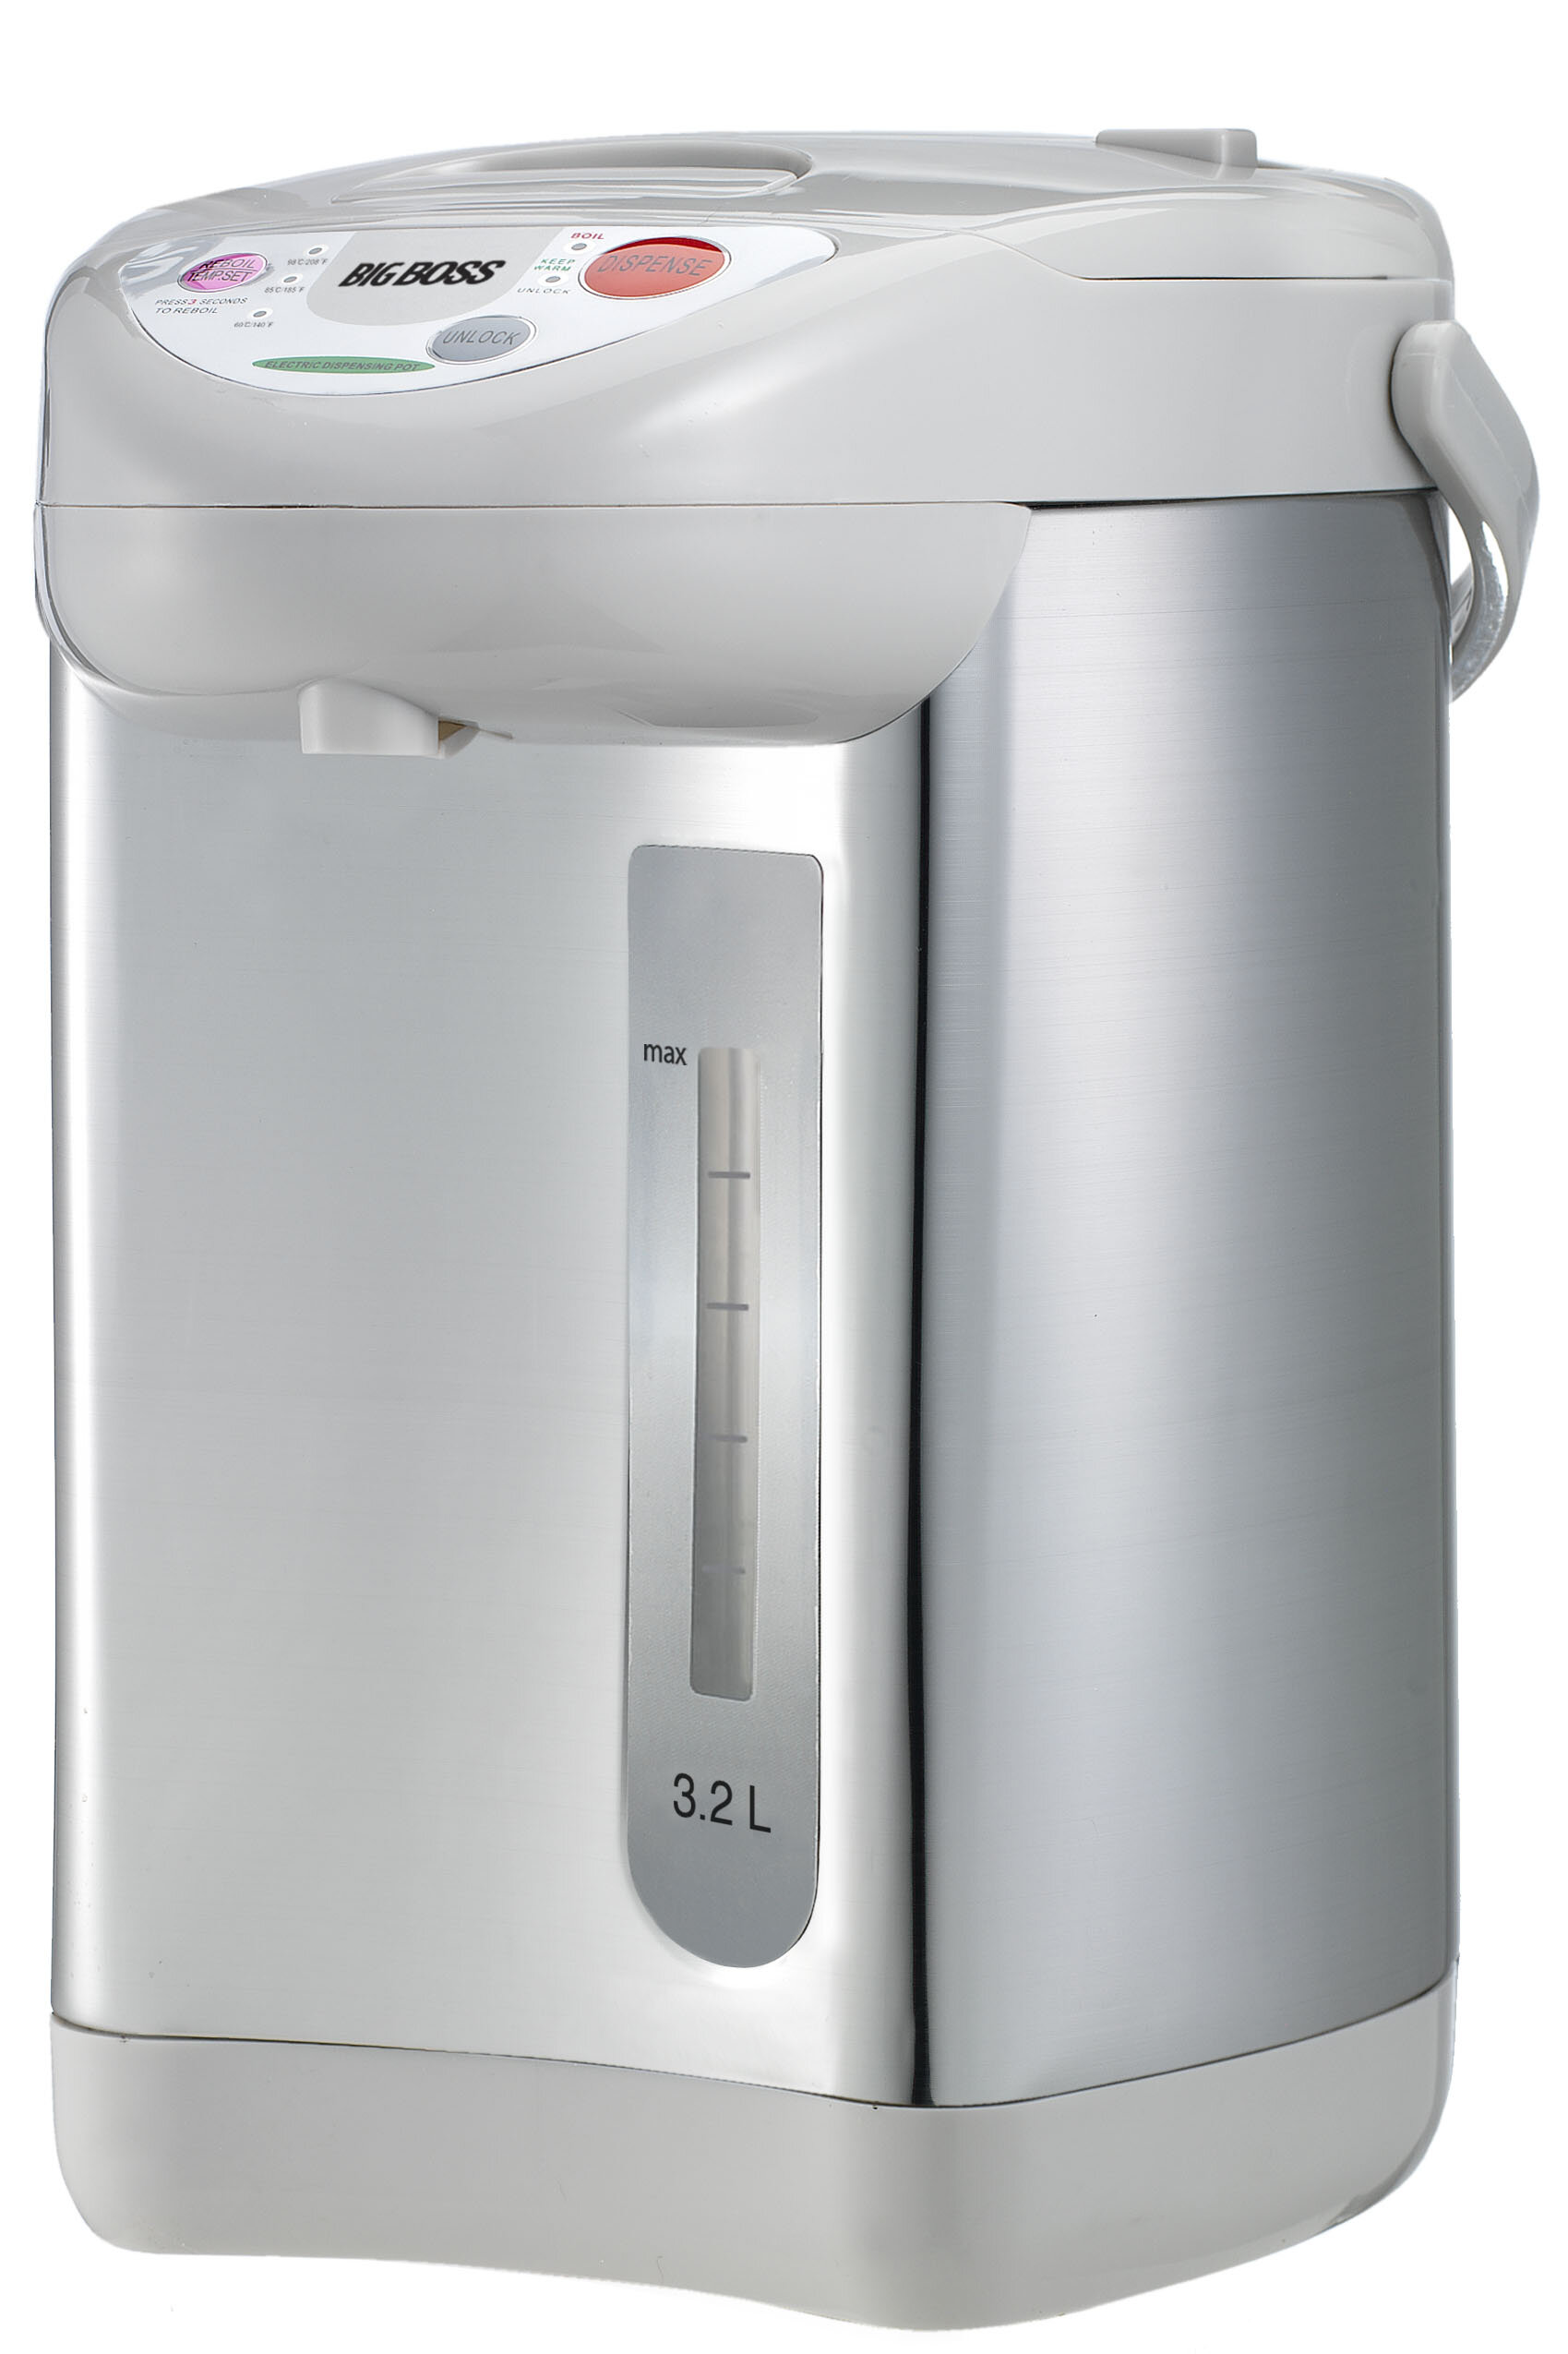 Zojirushi Micom Water Boiler & Warmer - 4.2 qt - Silver/Black